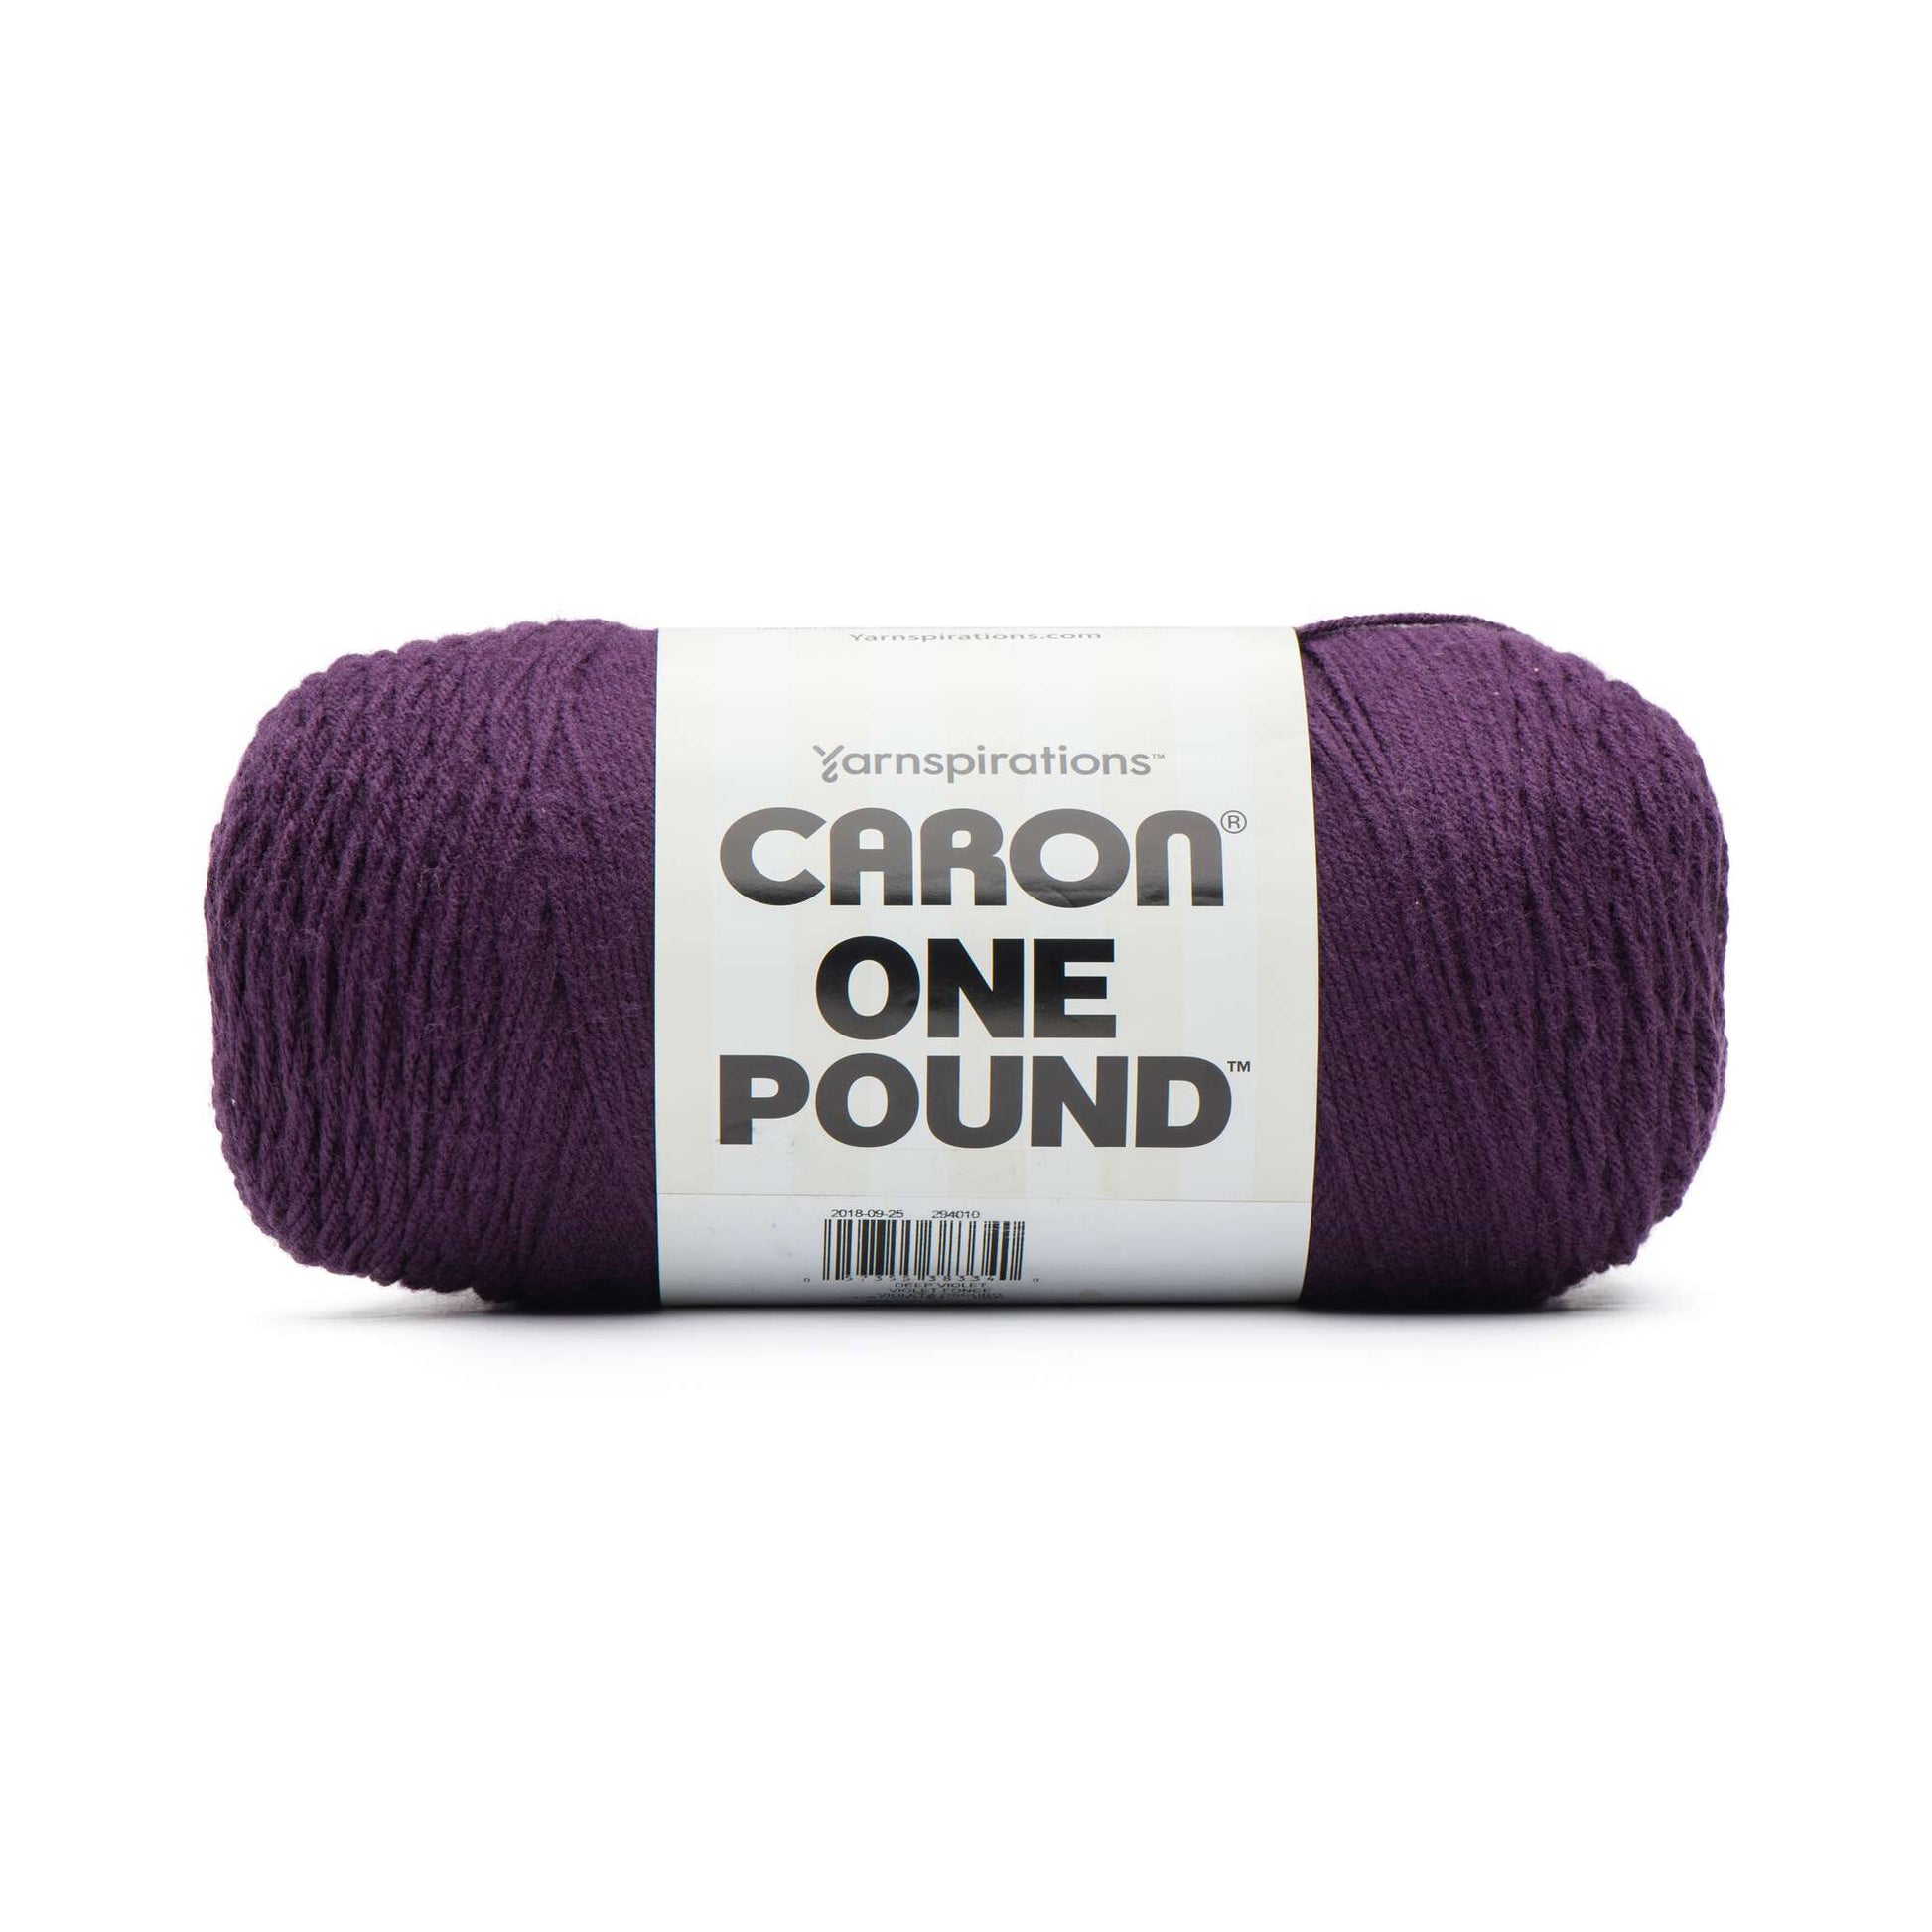 Caron One Pound Yarn Deep Violet